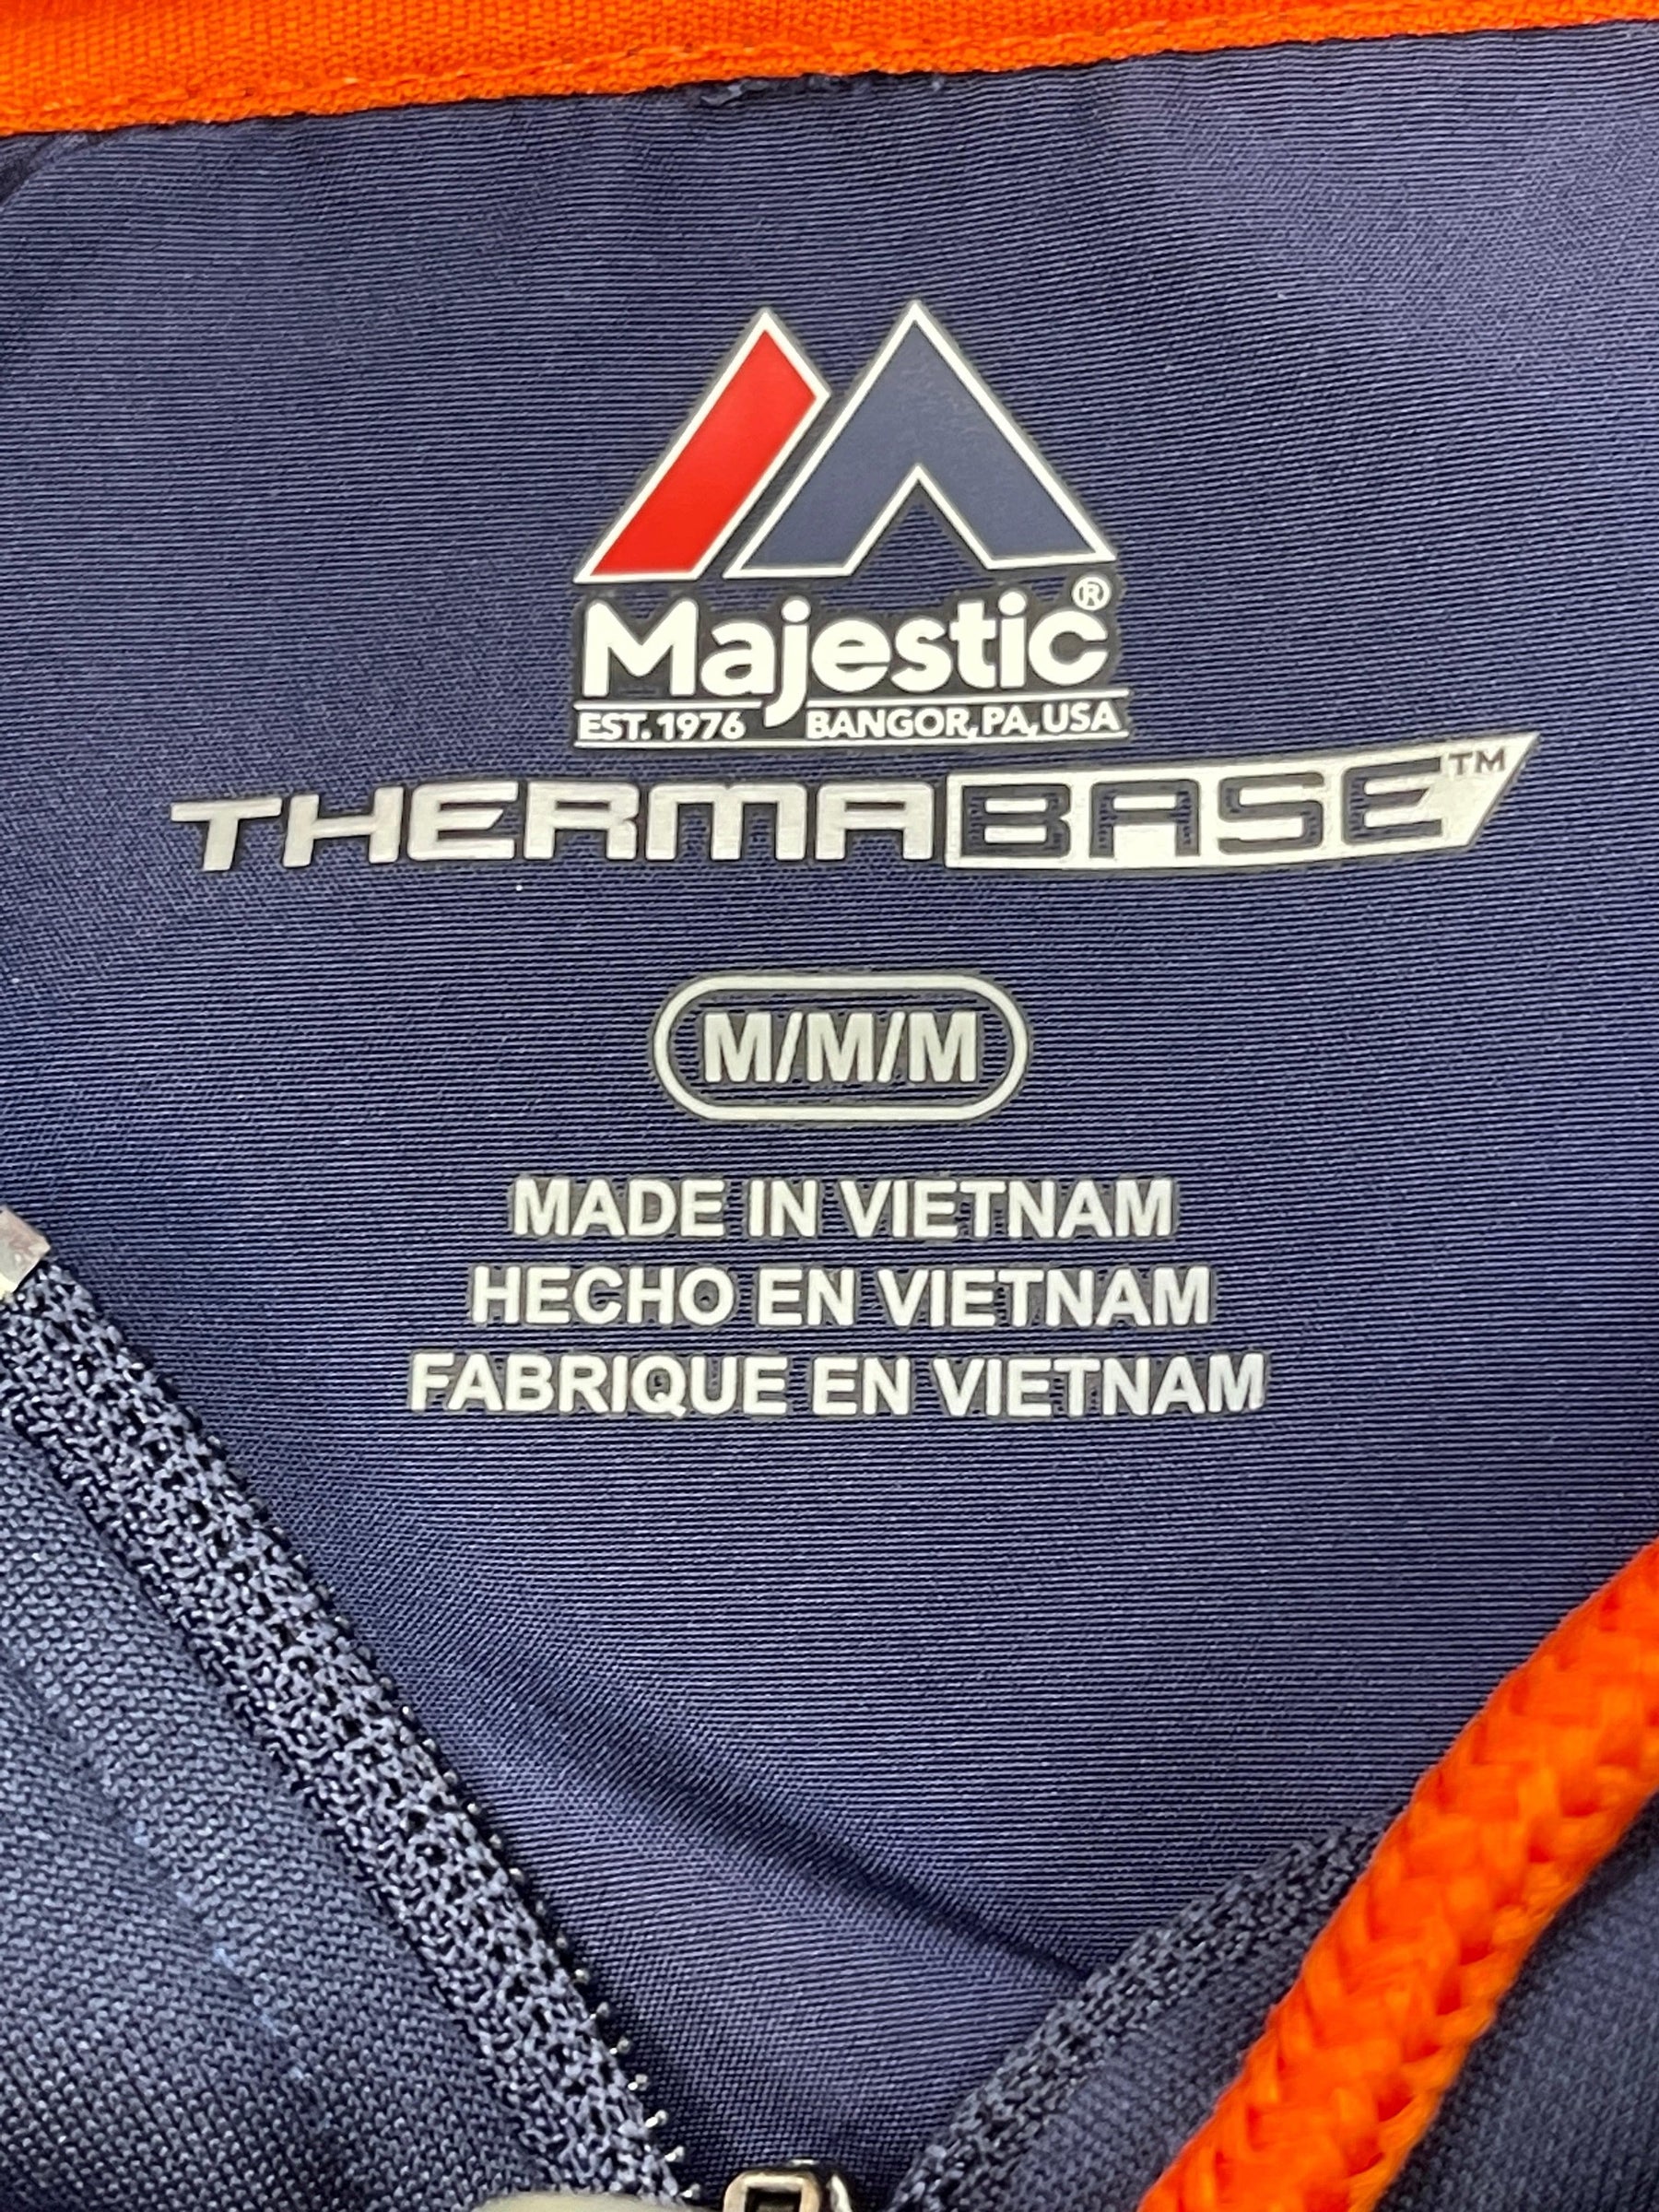 NFL Denver Broncos Majestic Therma Base Full Zip Jacket Men's Medium